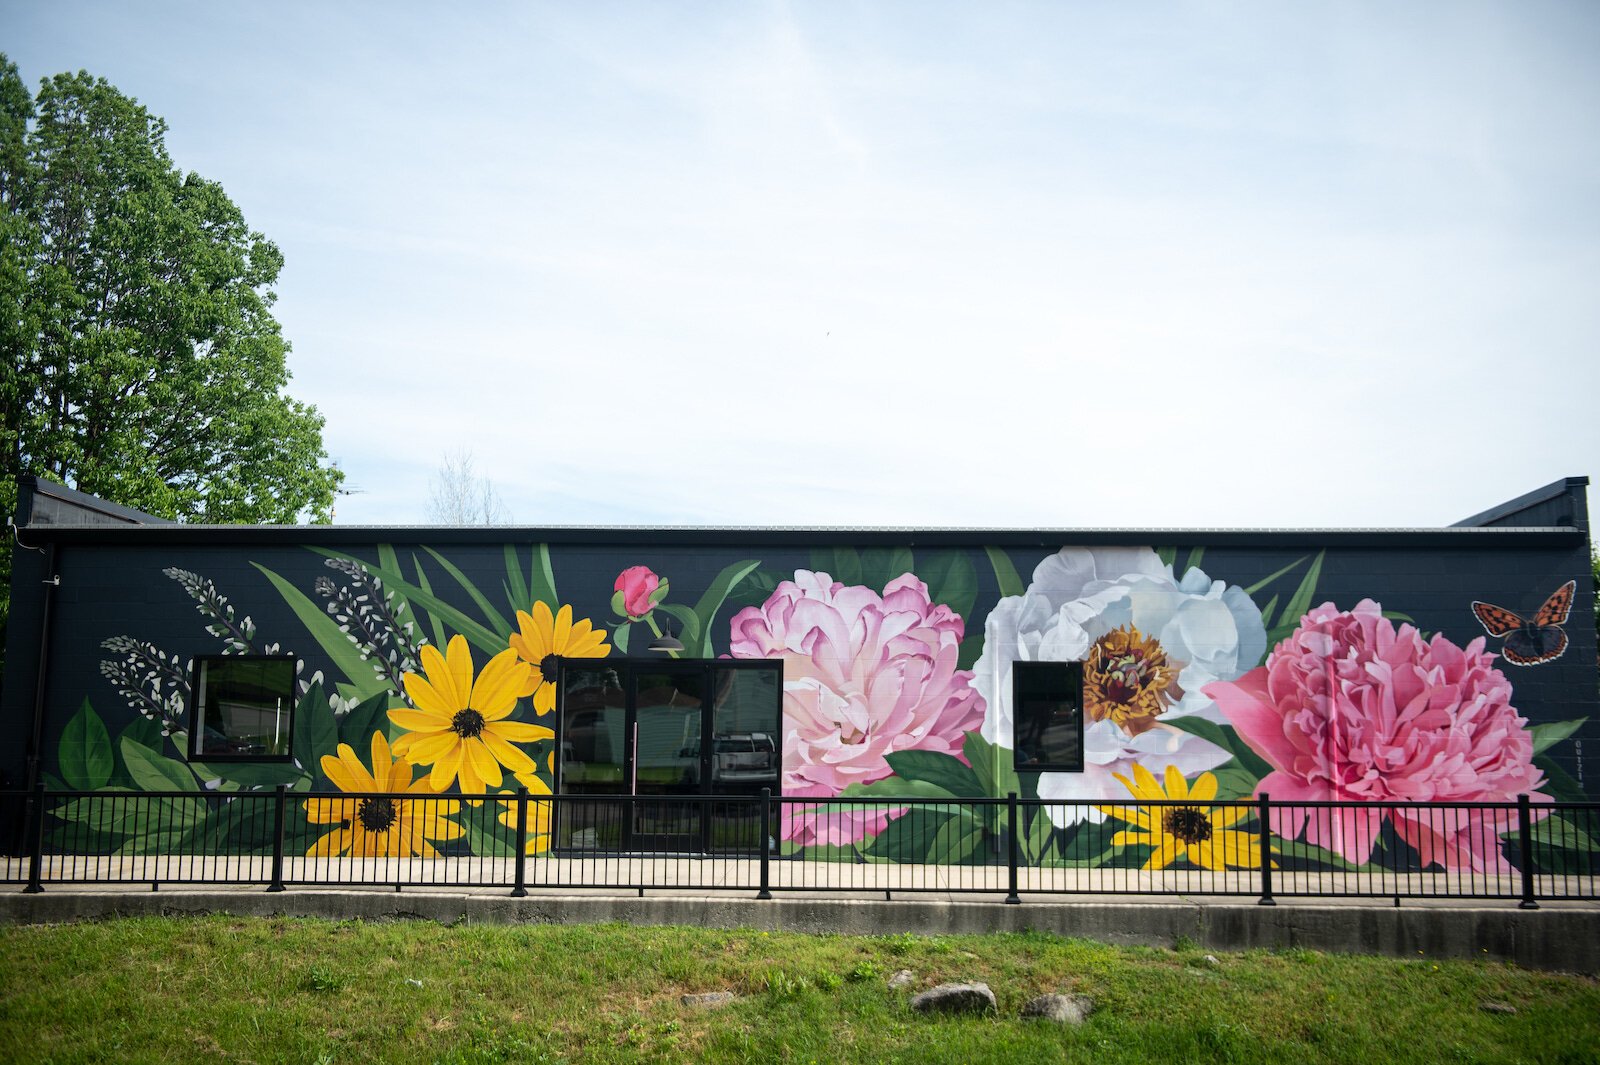 Muralist Louise 'Ouizi' Jones painted the side of Reusser, a digital agency located at 150 S. Main St. in Roanoke.